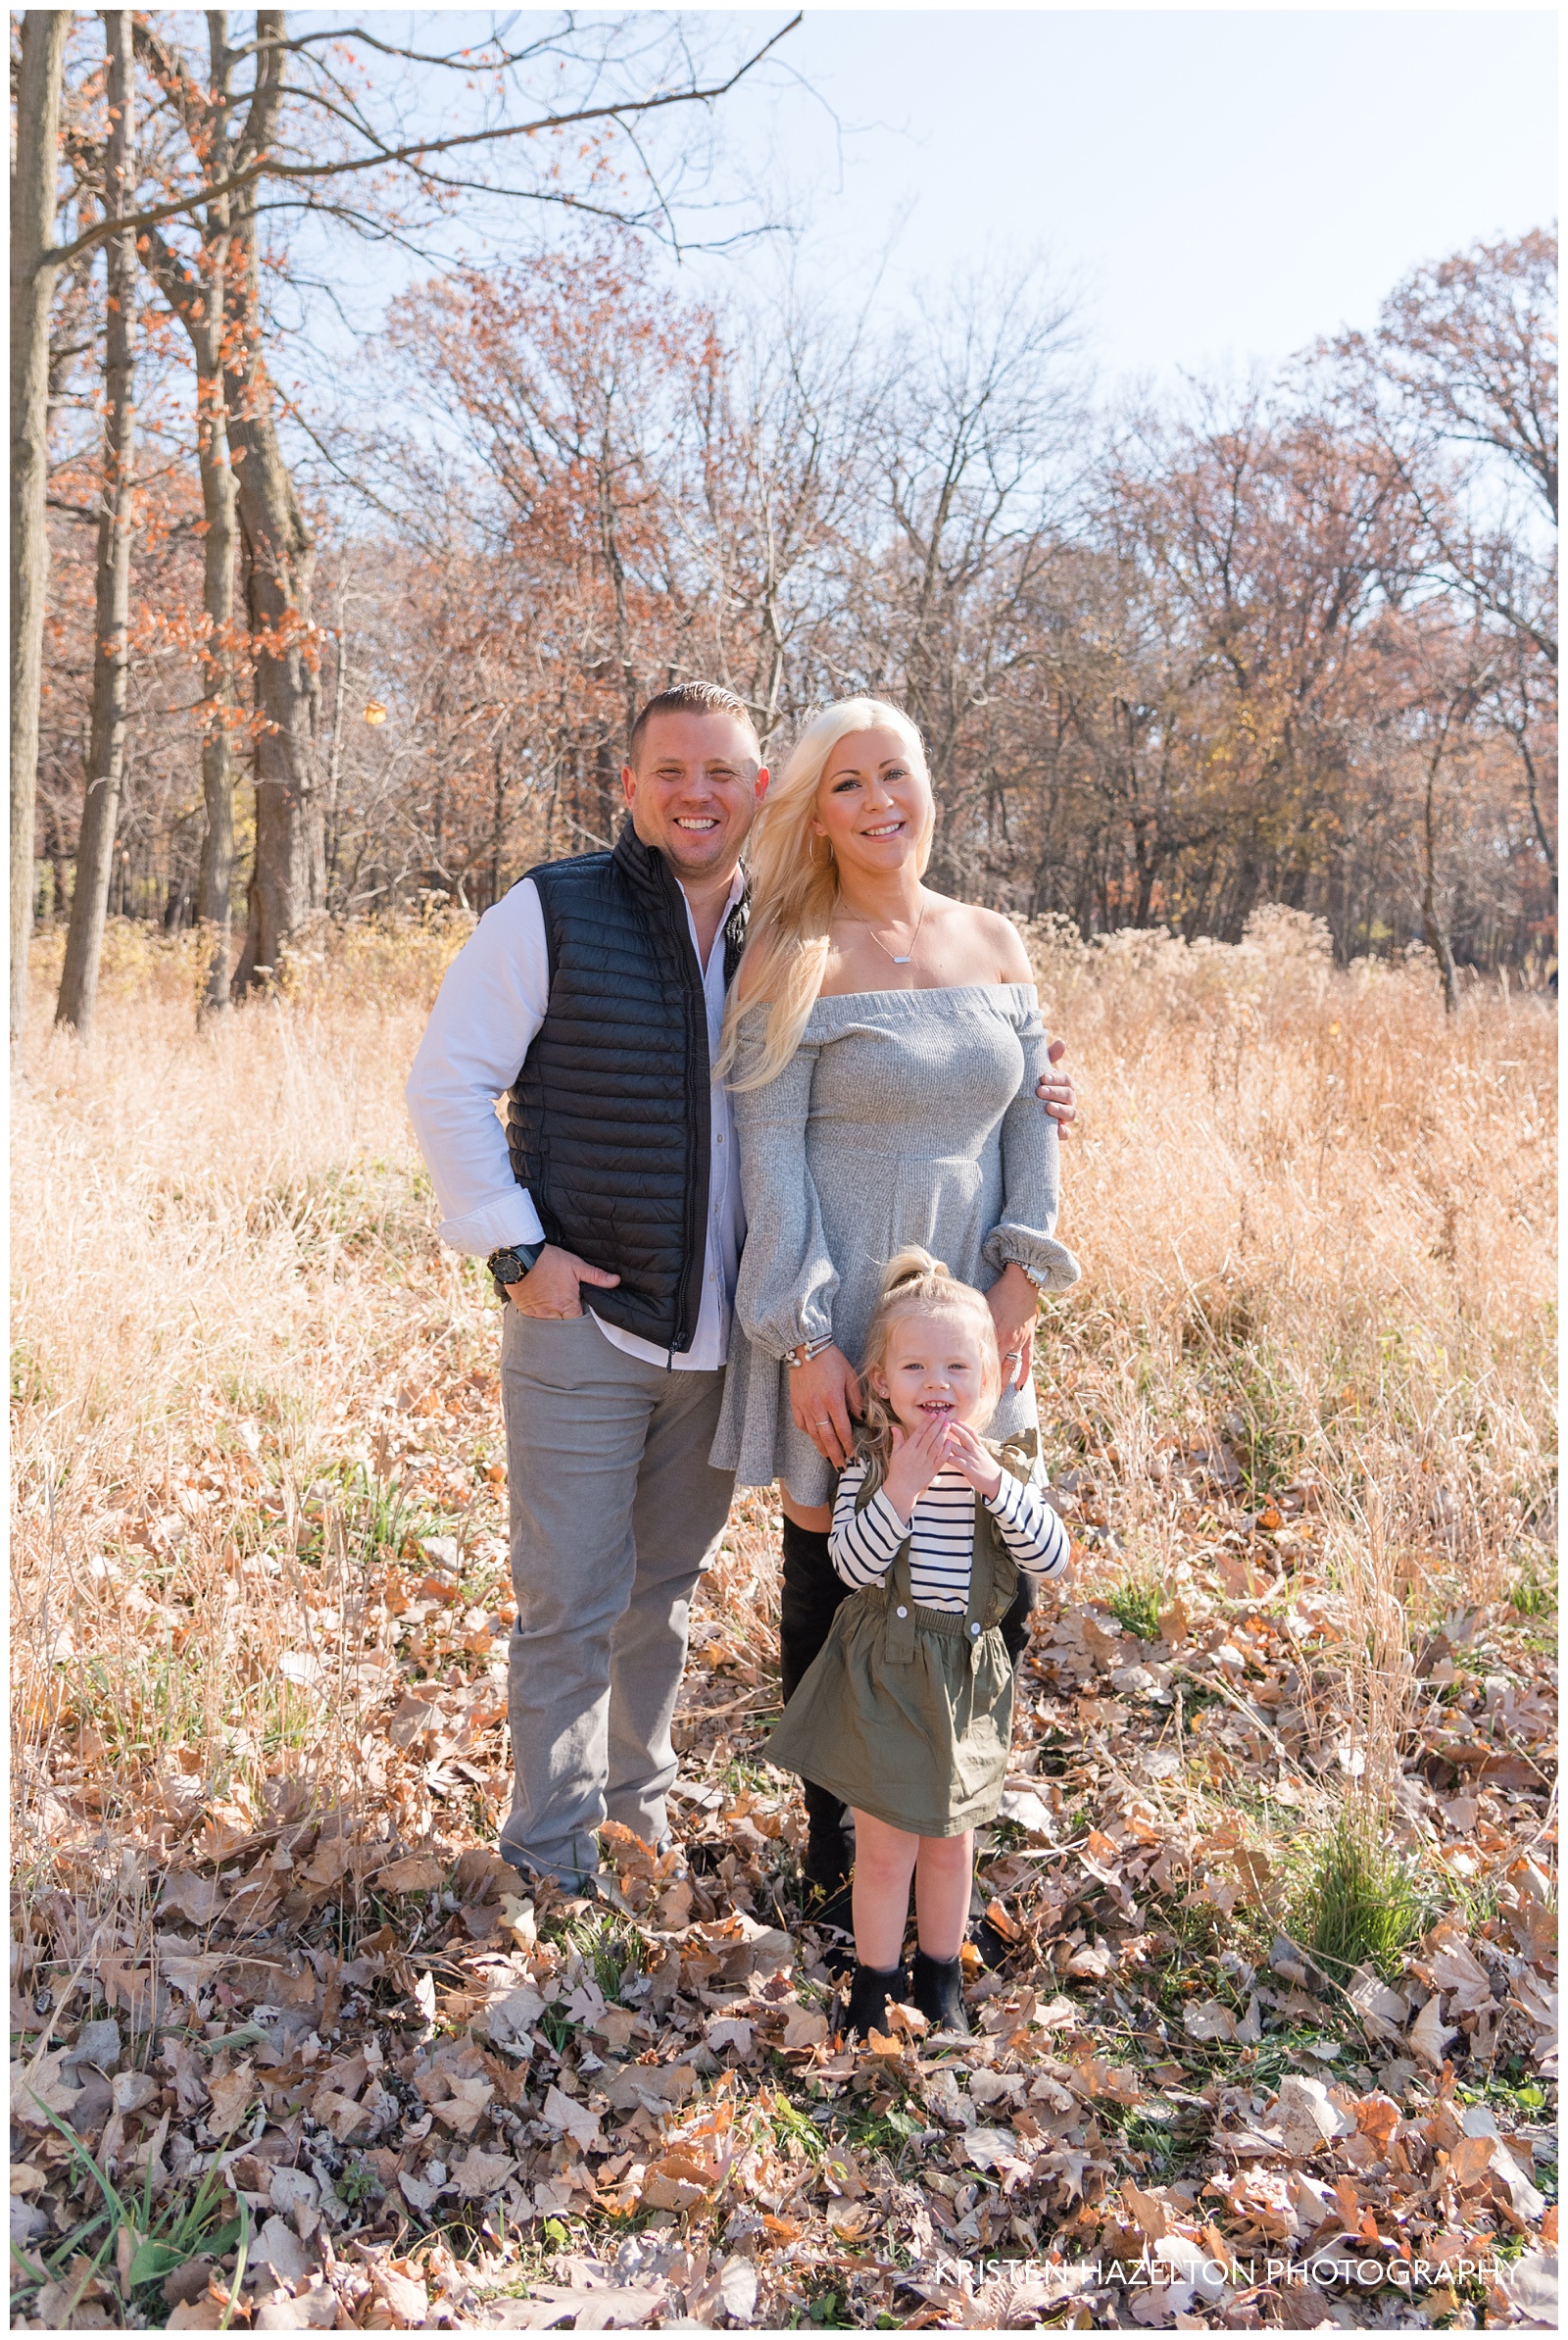 Family portraits in Thatcher Woods, River Forest, IL by Oak Park photographer Kristen Hazelton